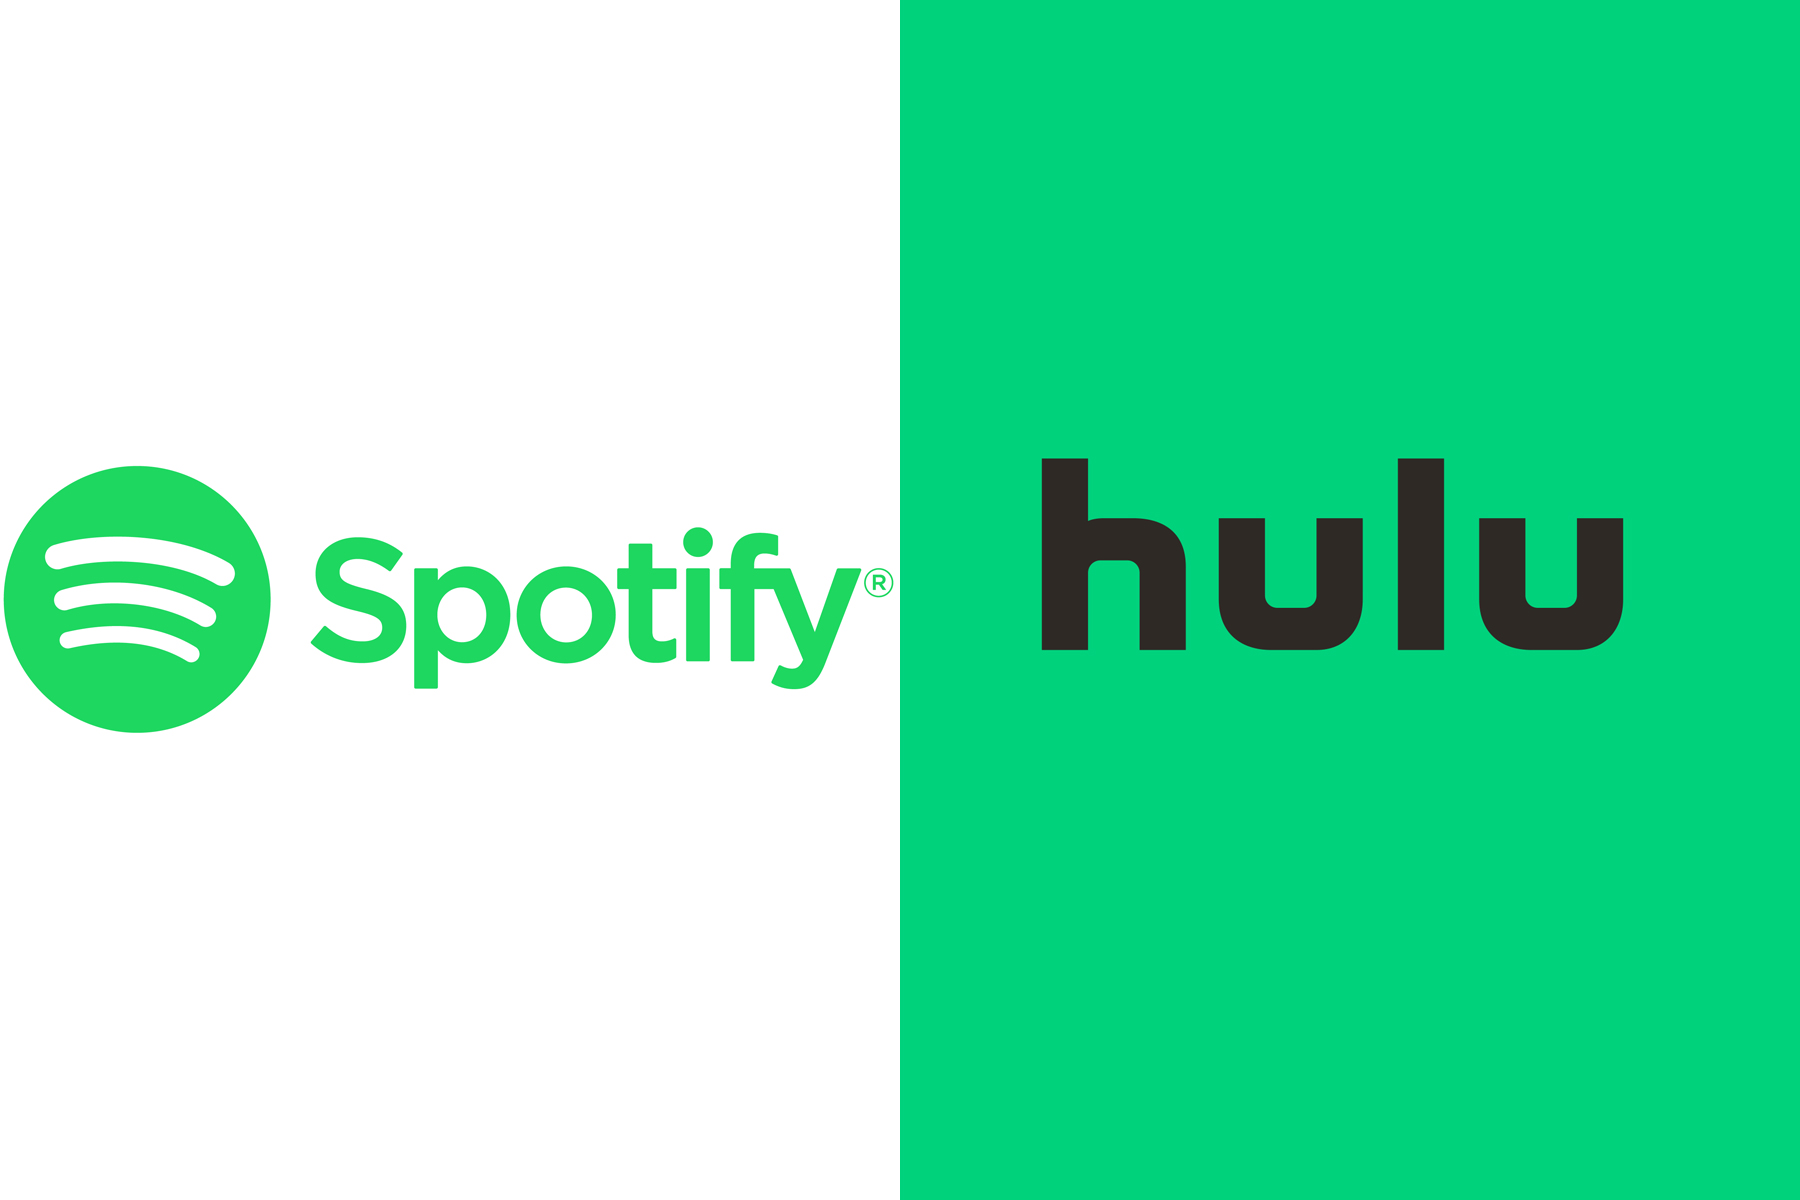 Spotify Plus Hulu Free